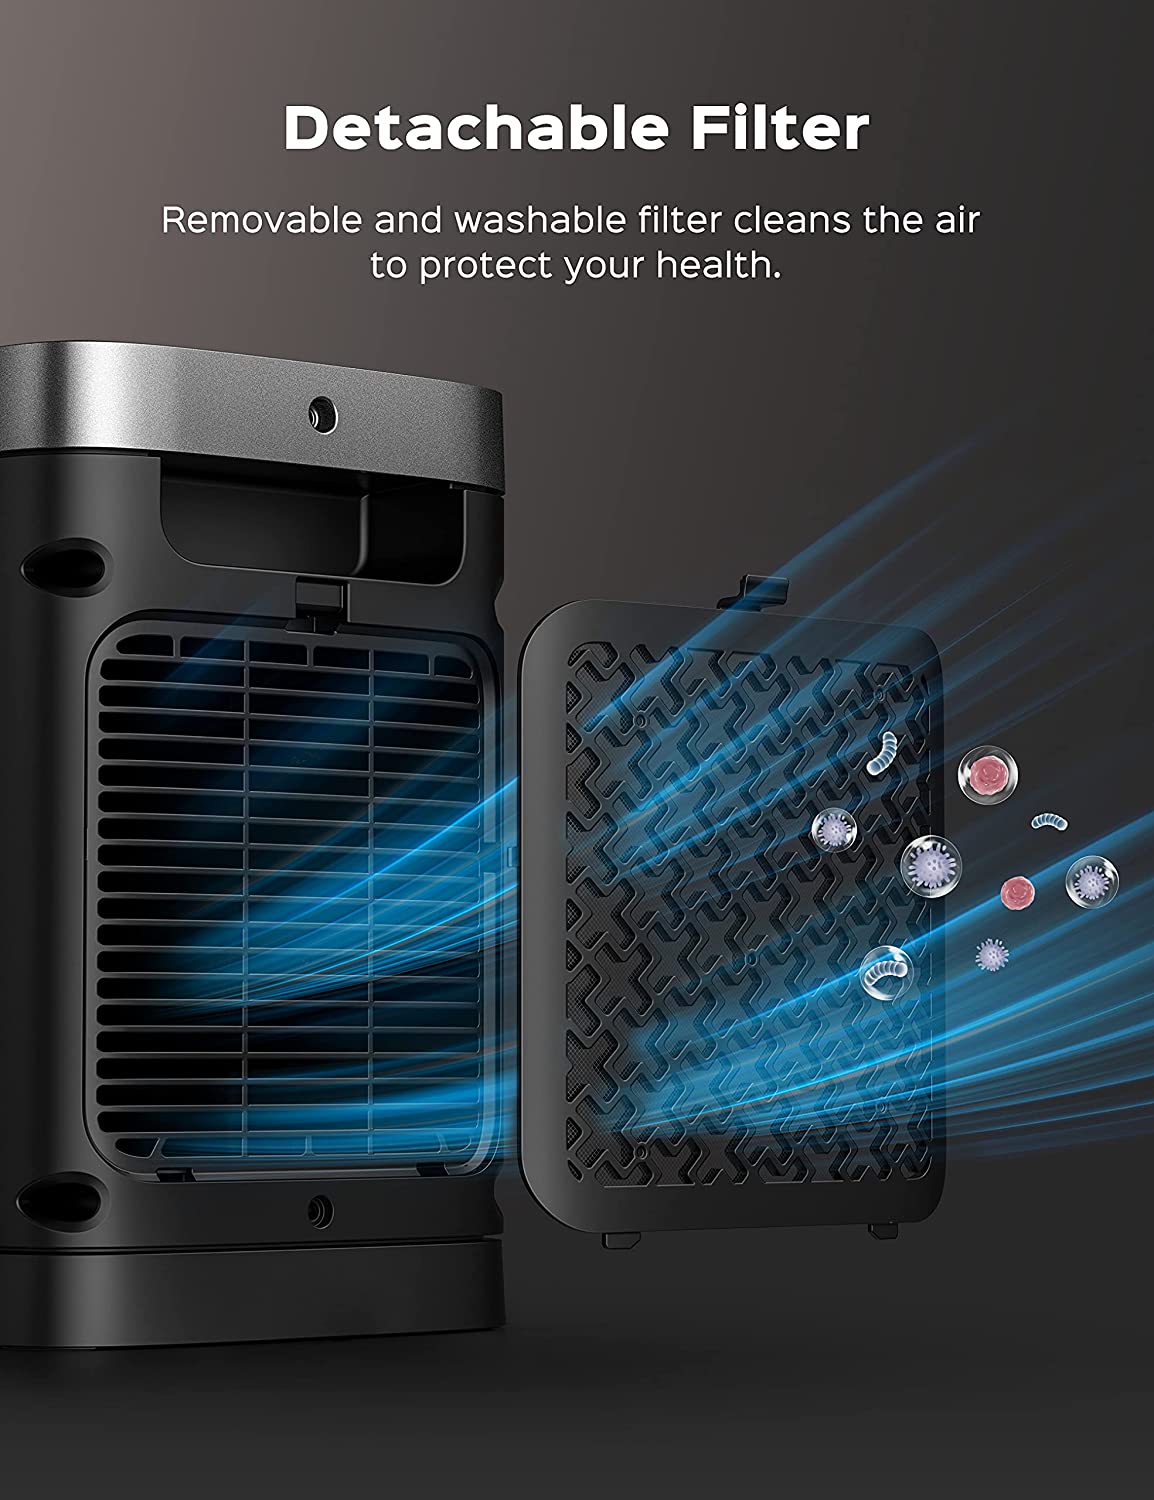 Black & Decker 9 1500W Personal Ceramic Heater w/ Safety Tip-over